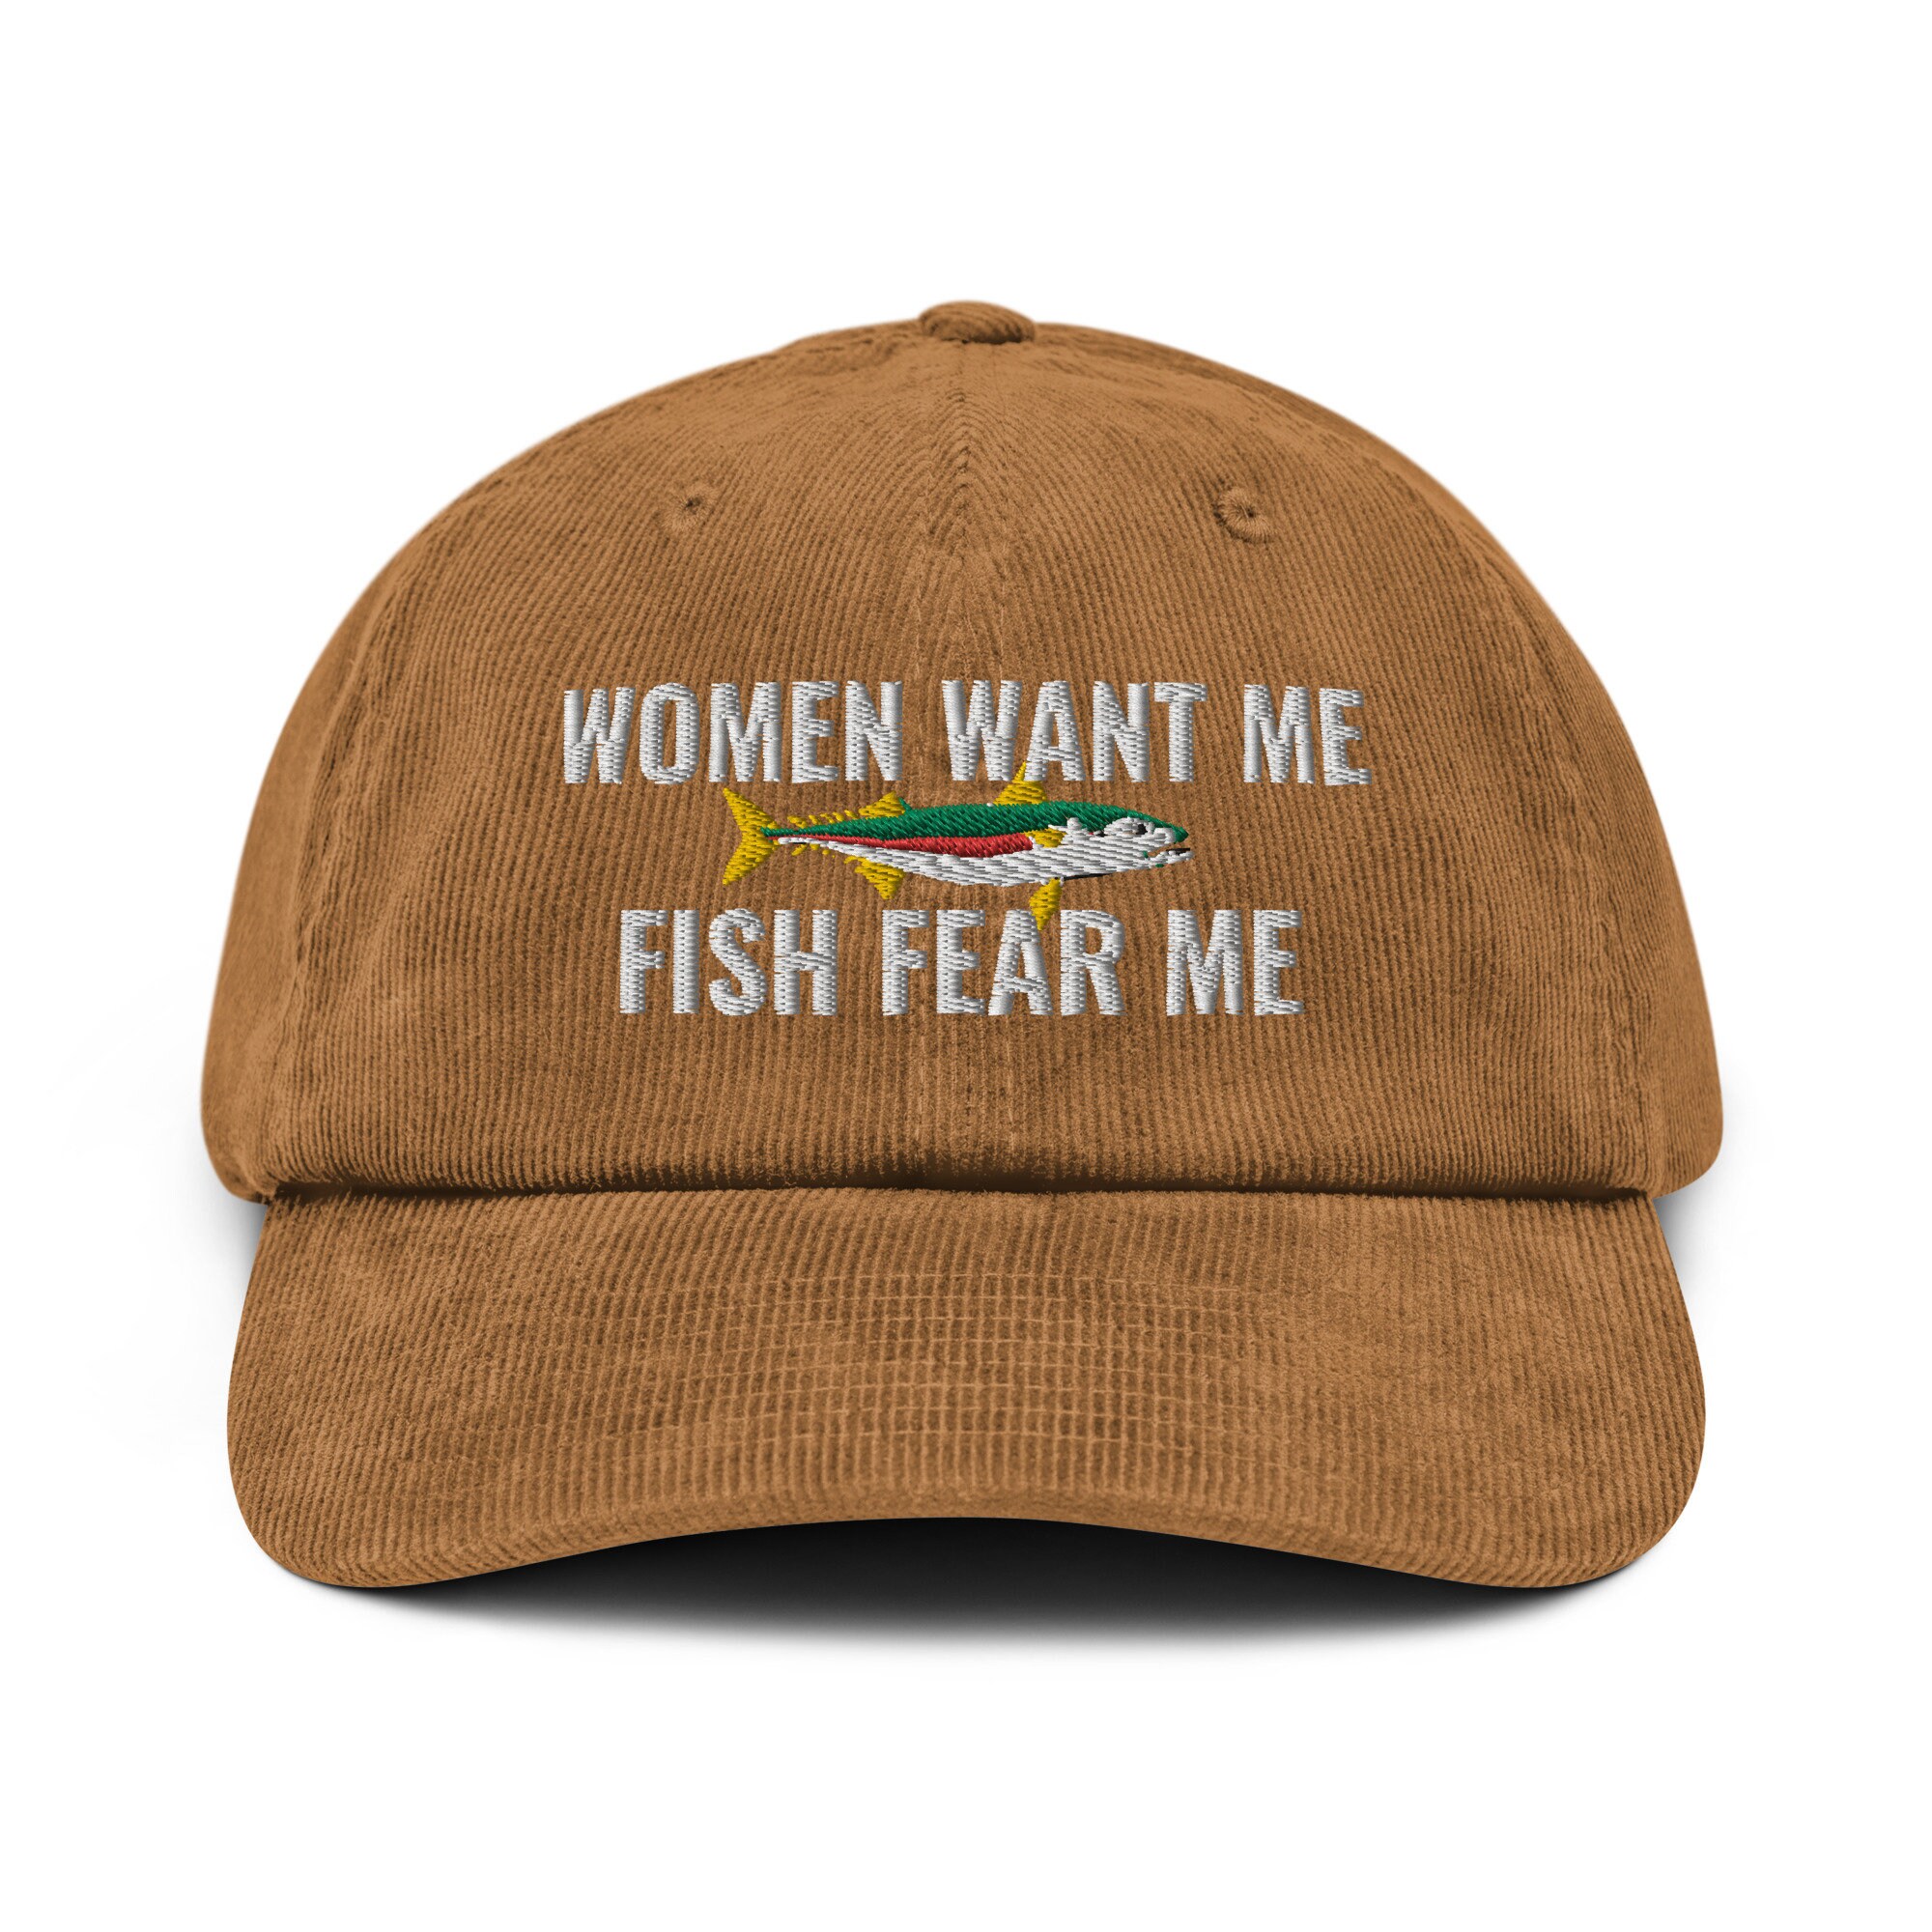 Women Want Me Fish Fear Me Funny Meme Flag, Cursed Flag, Unisex